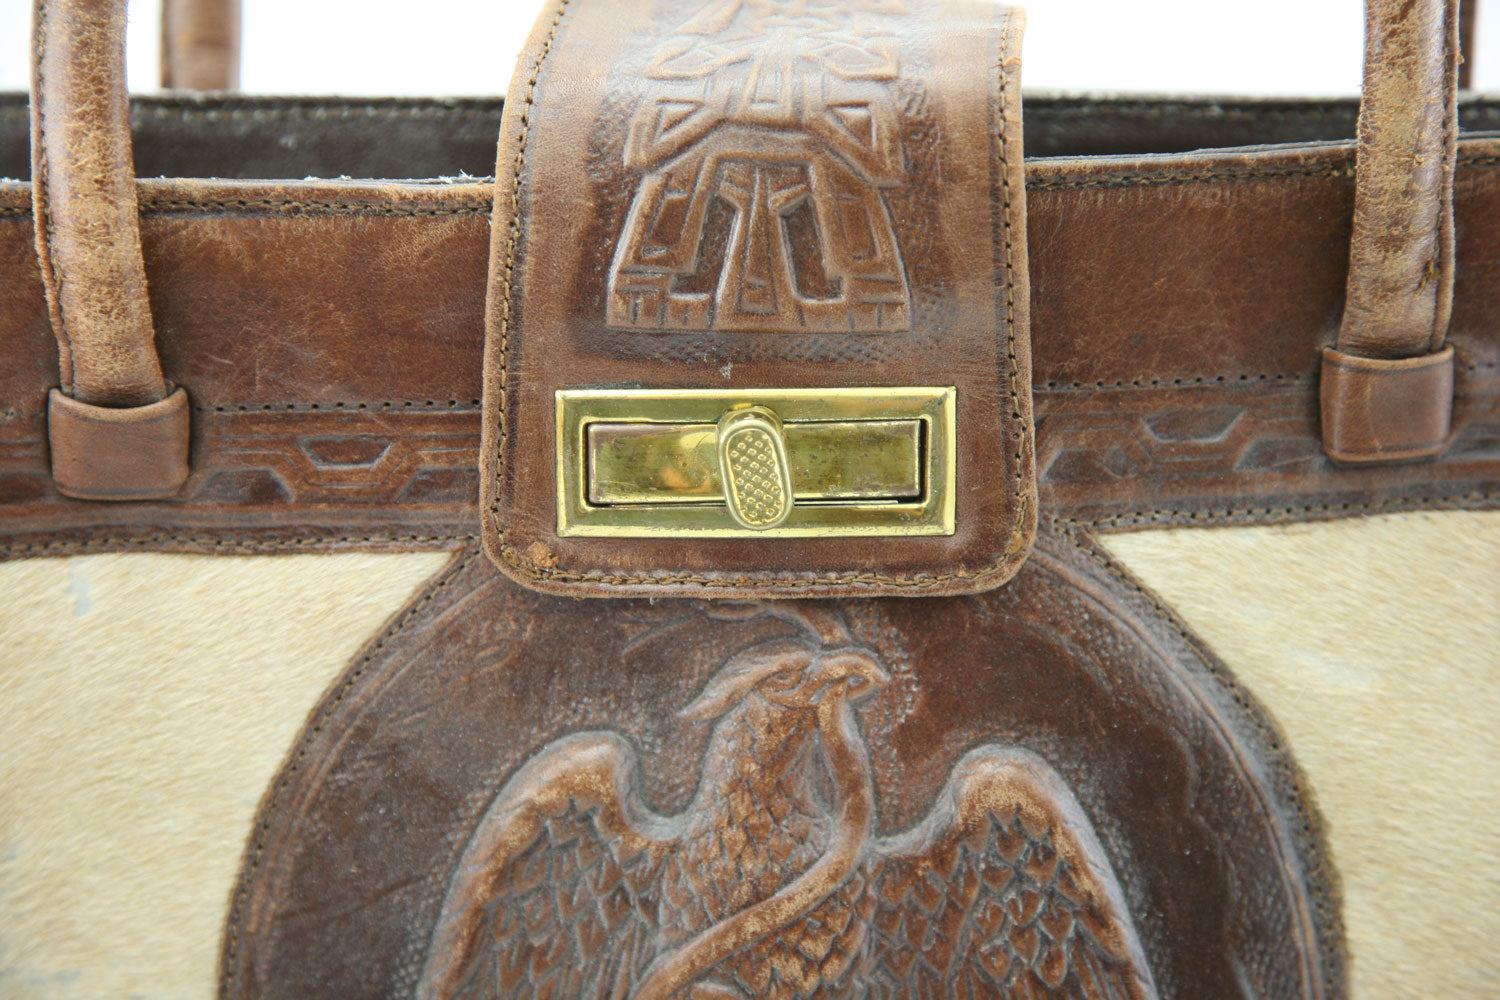 Vintage Leather Purse with Eagle Design